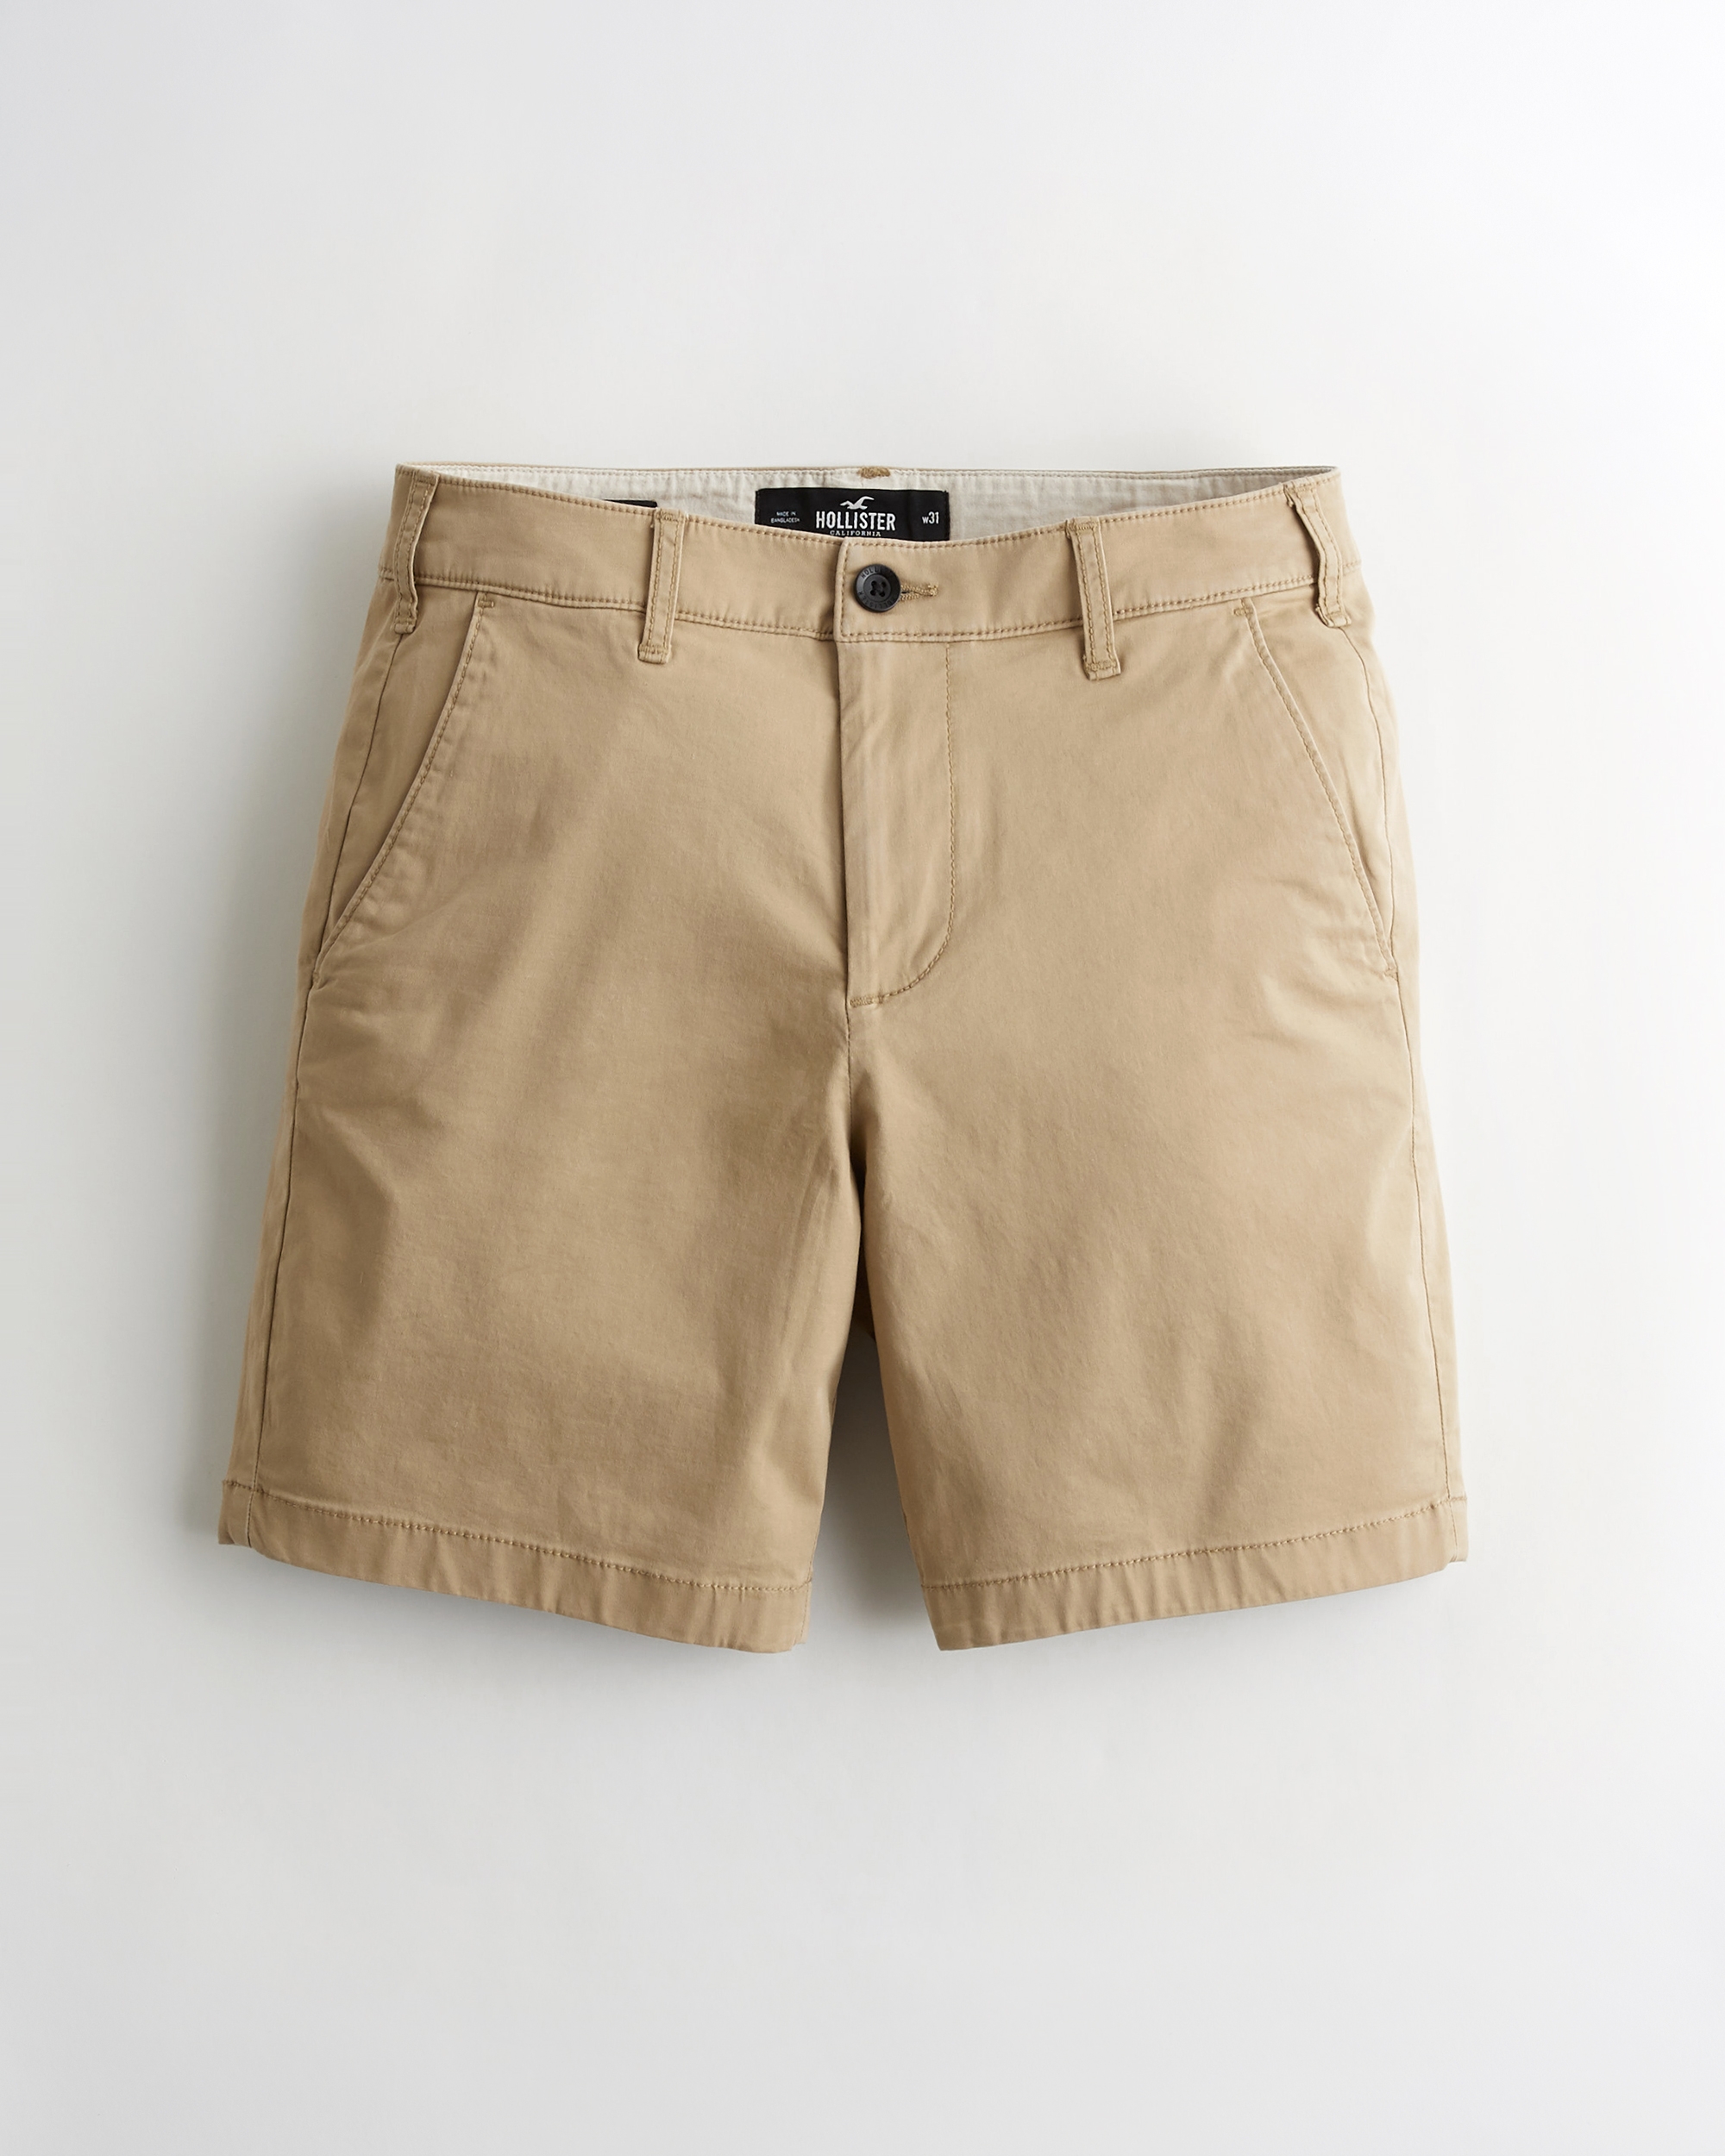 hollister khaki shorts